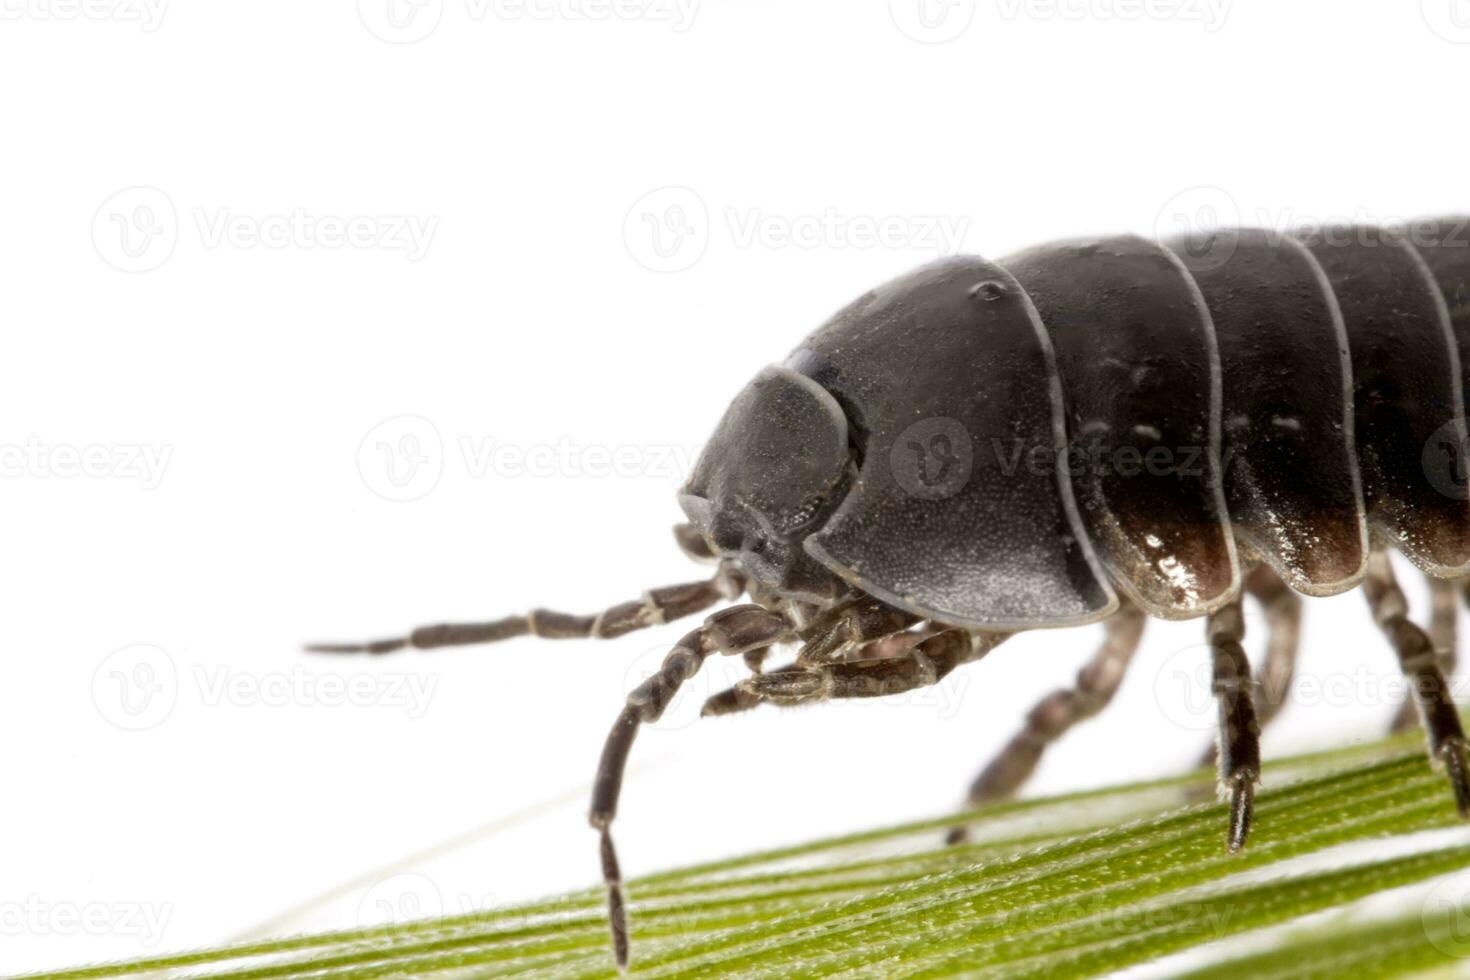 Woodlice bug close up photo